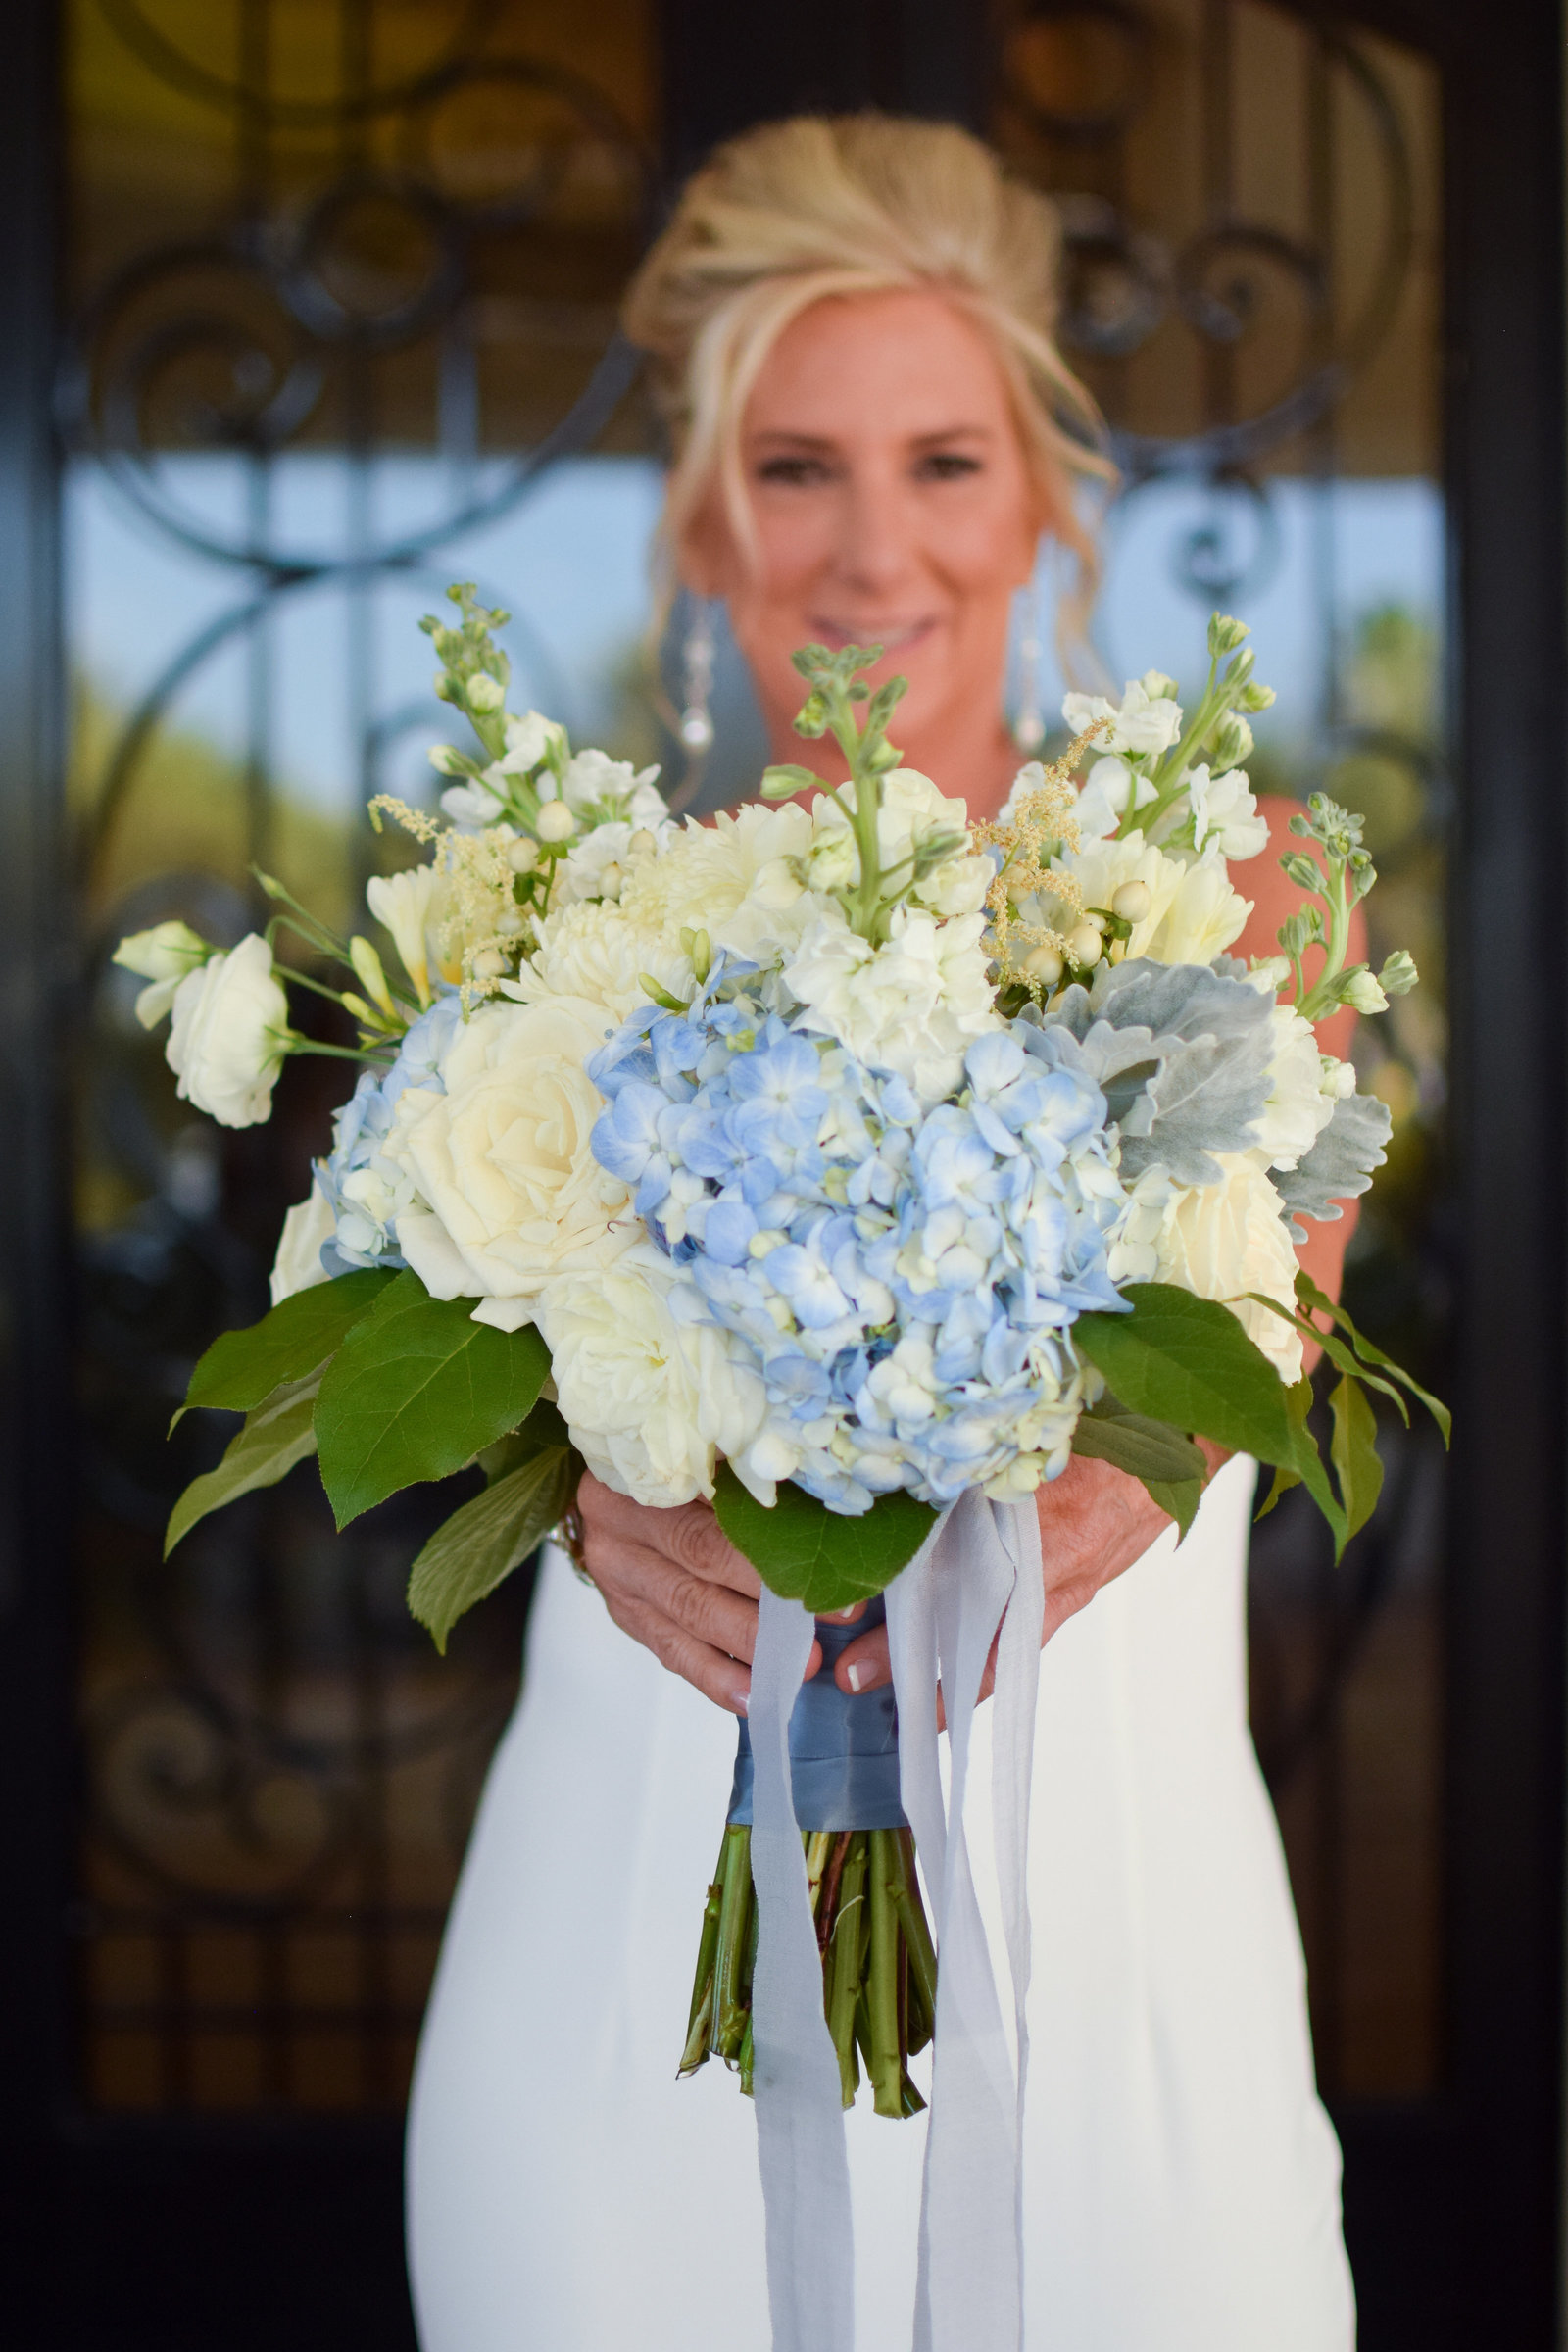 Wedding Bride Bouquet Hydrangea White and Blue Wedding Bridal Portrait Updo simple chic white dress One Ocean Resort Jacksonville Florida